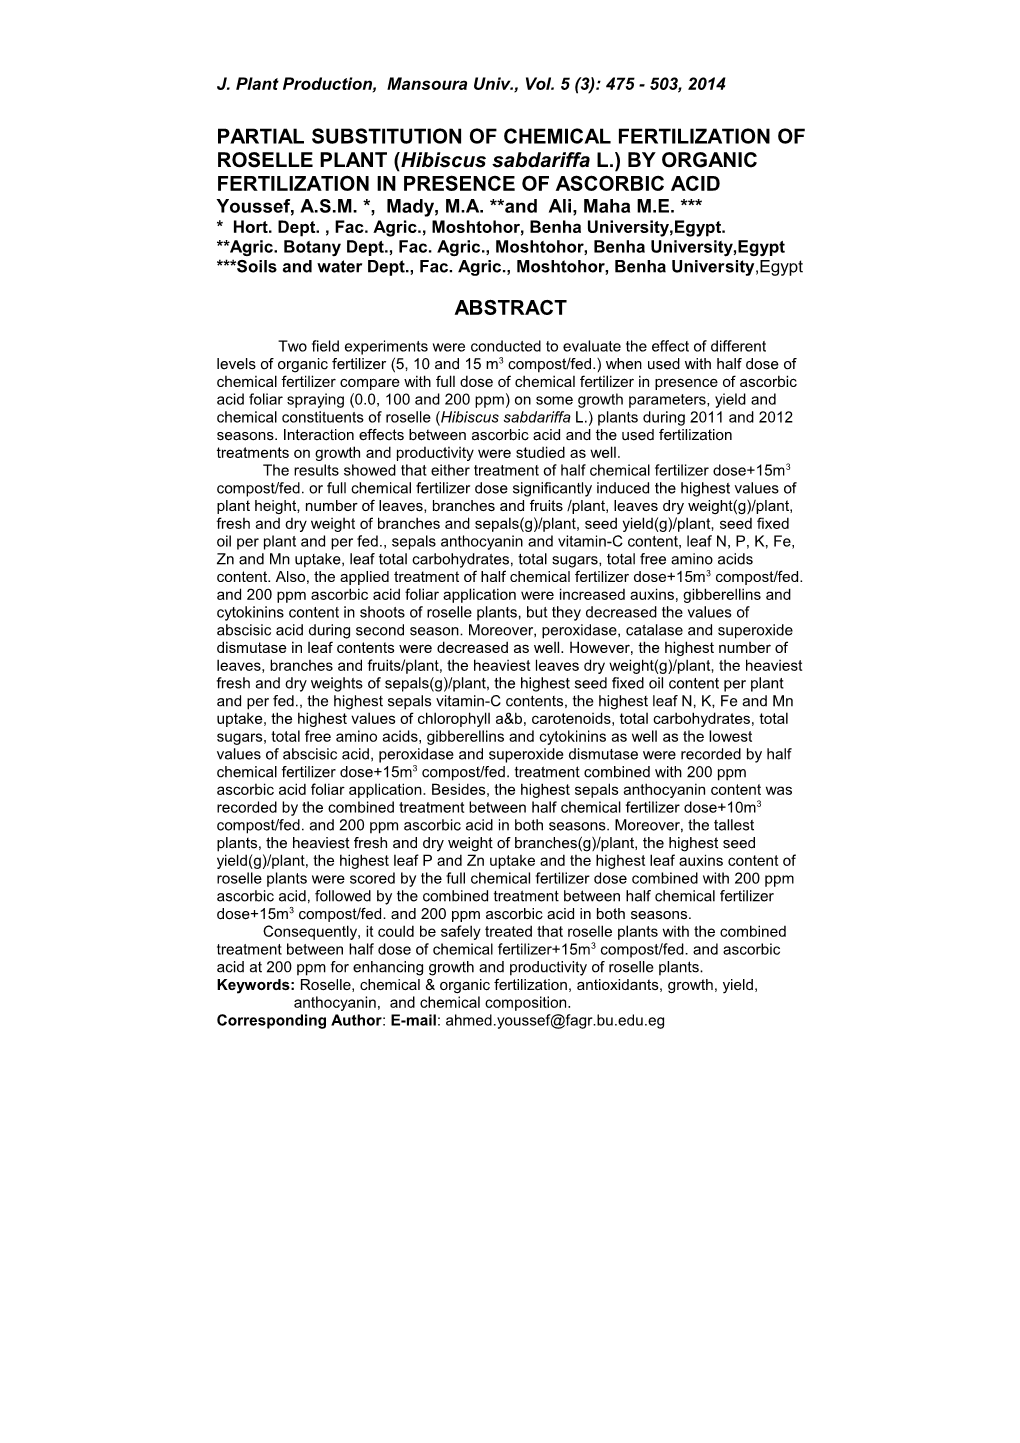 Partial Substitution of Chemical Fertilization of Roselle Plant (Hibiscus Sabdariffa L